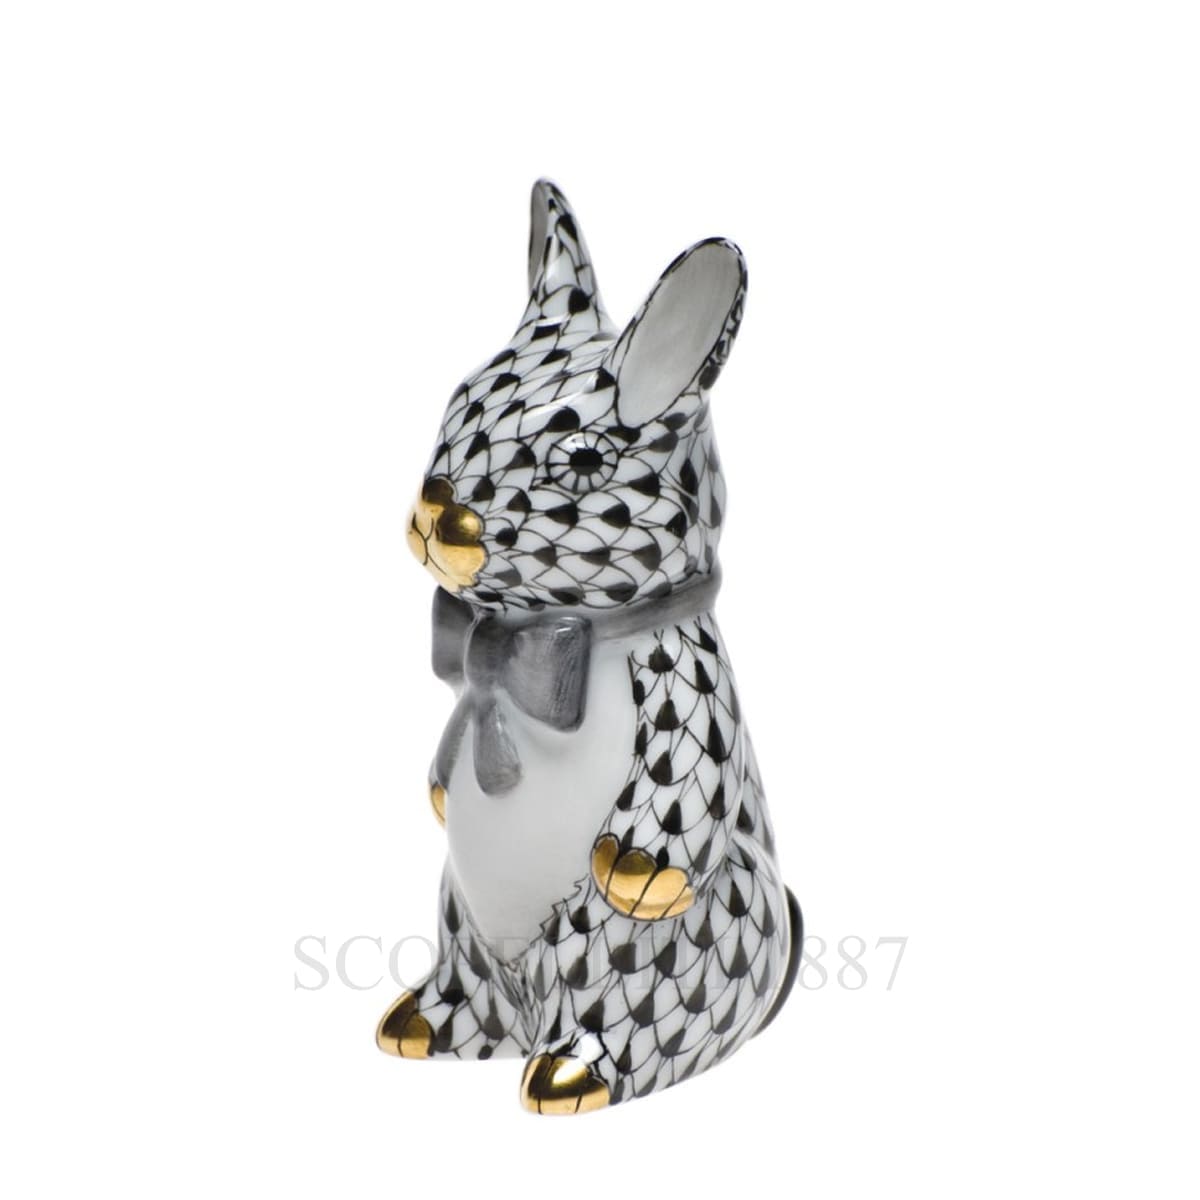 Herend Bunny Figurine 15241